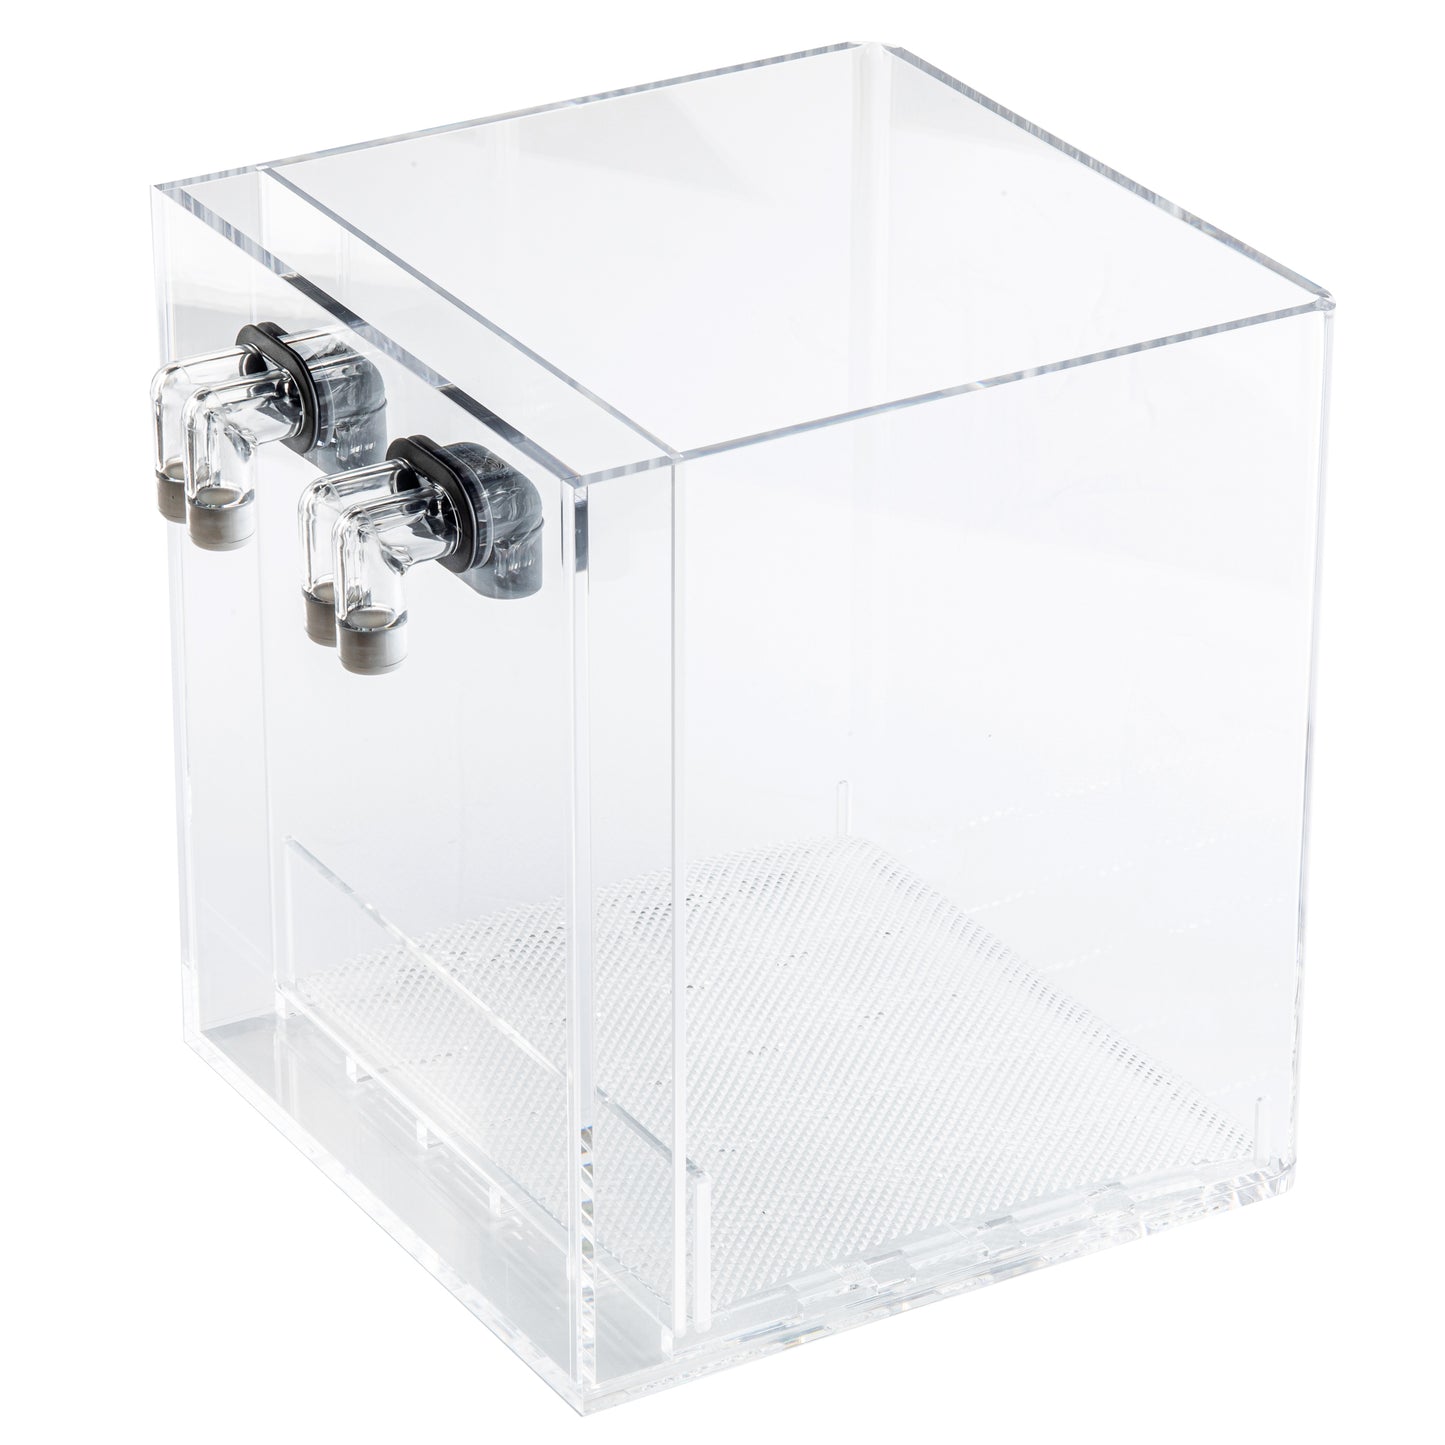 3 Gallon KIT | Cube Self-Cleaning Aquarium | Lid | Waterfall Basin | Dazzle LED